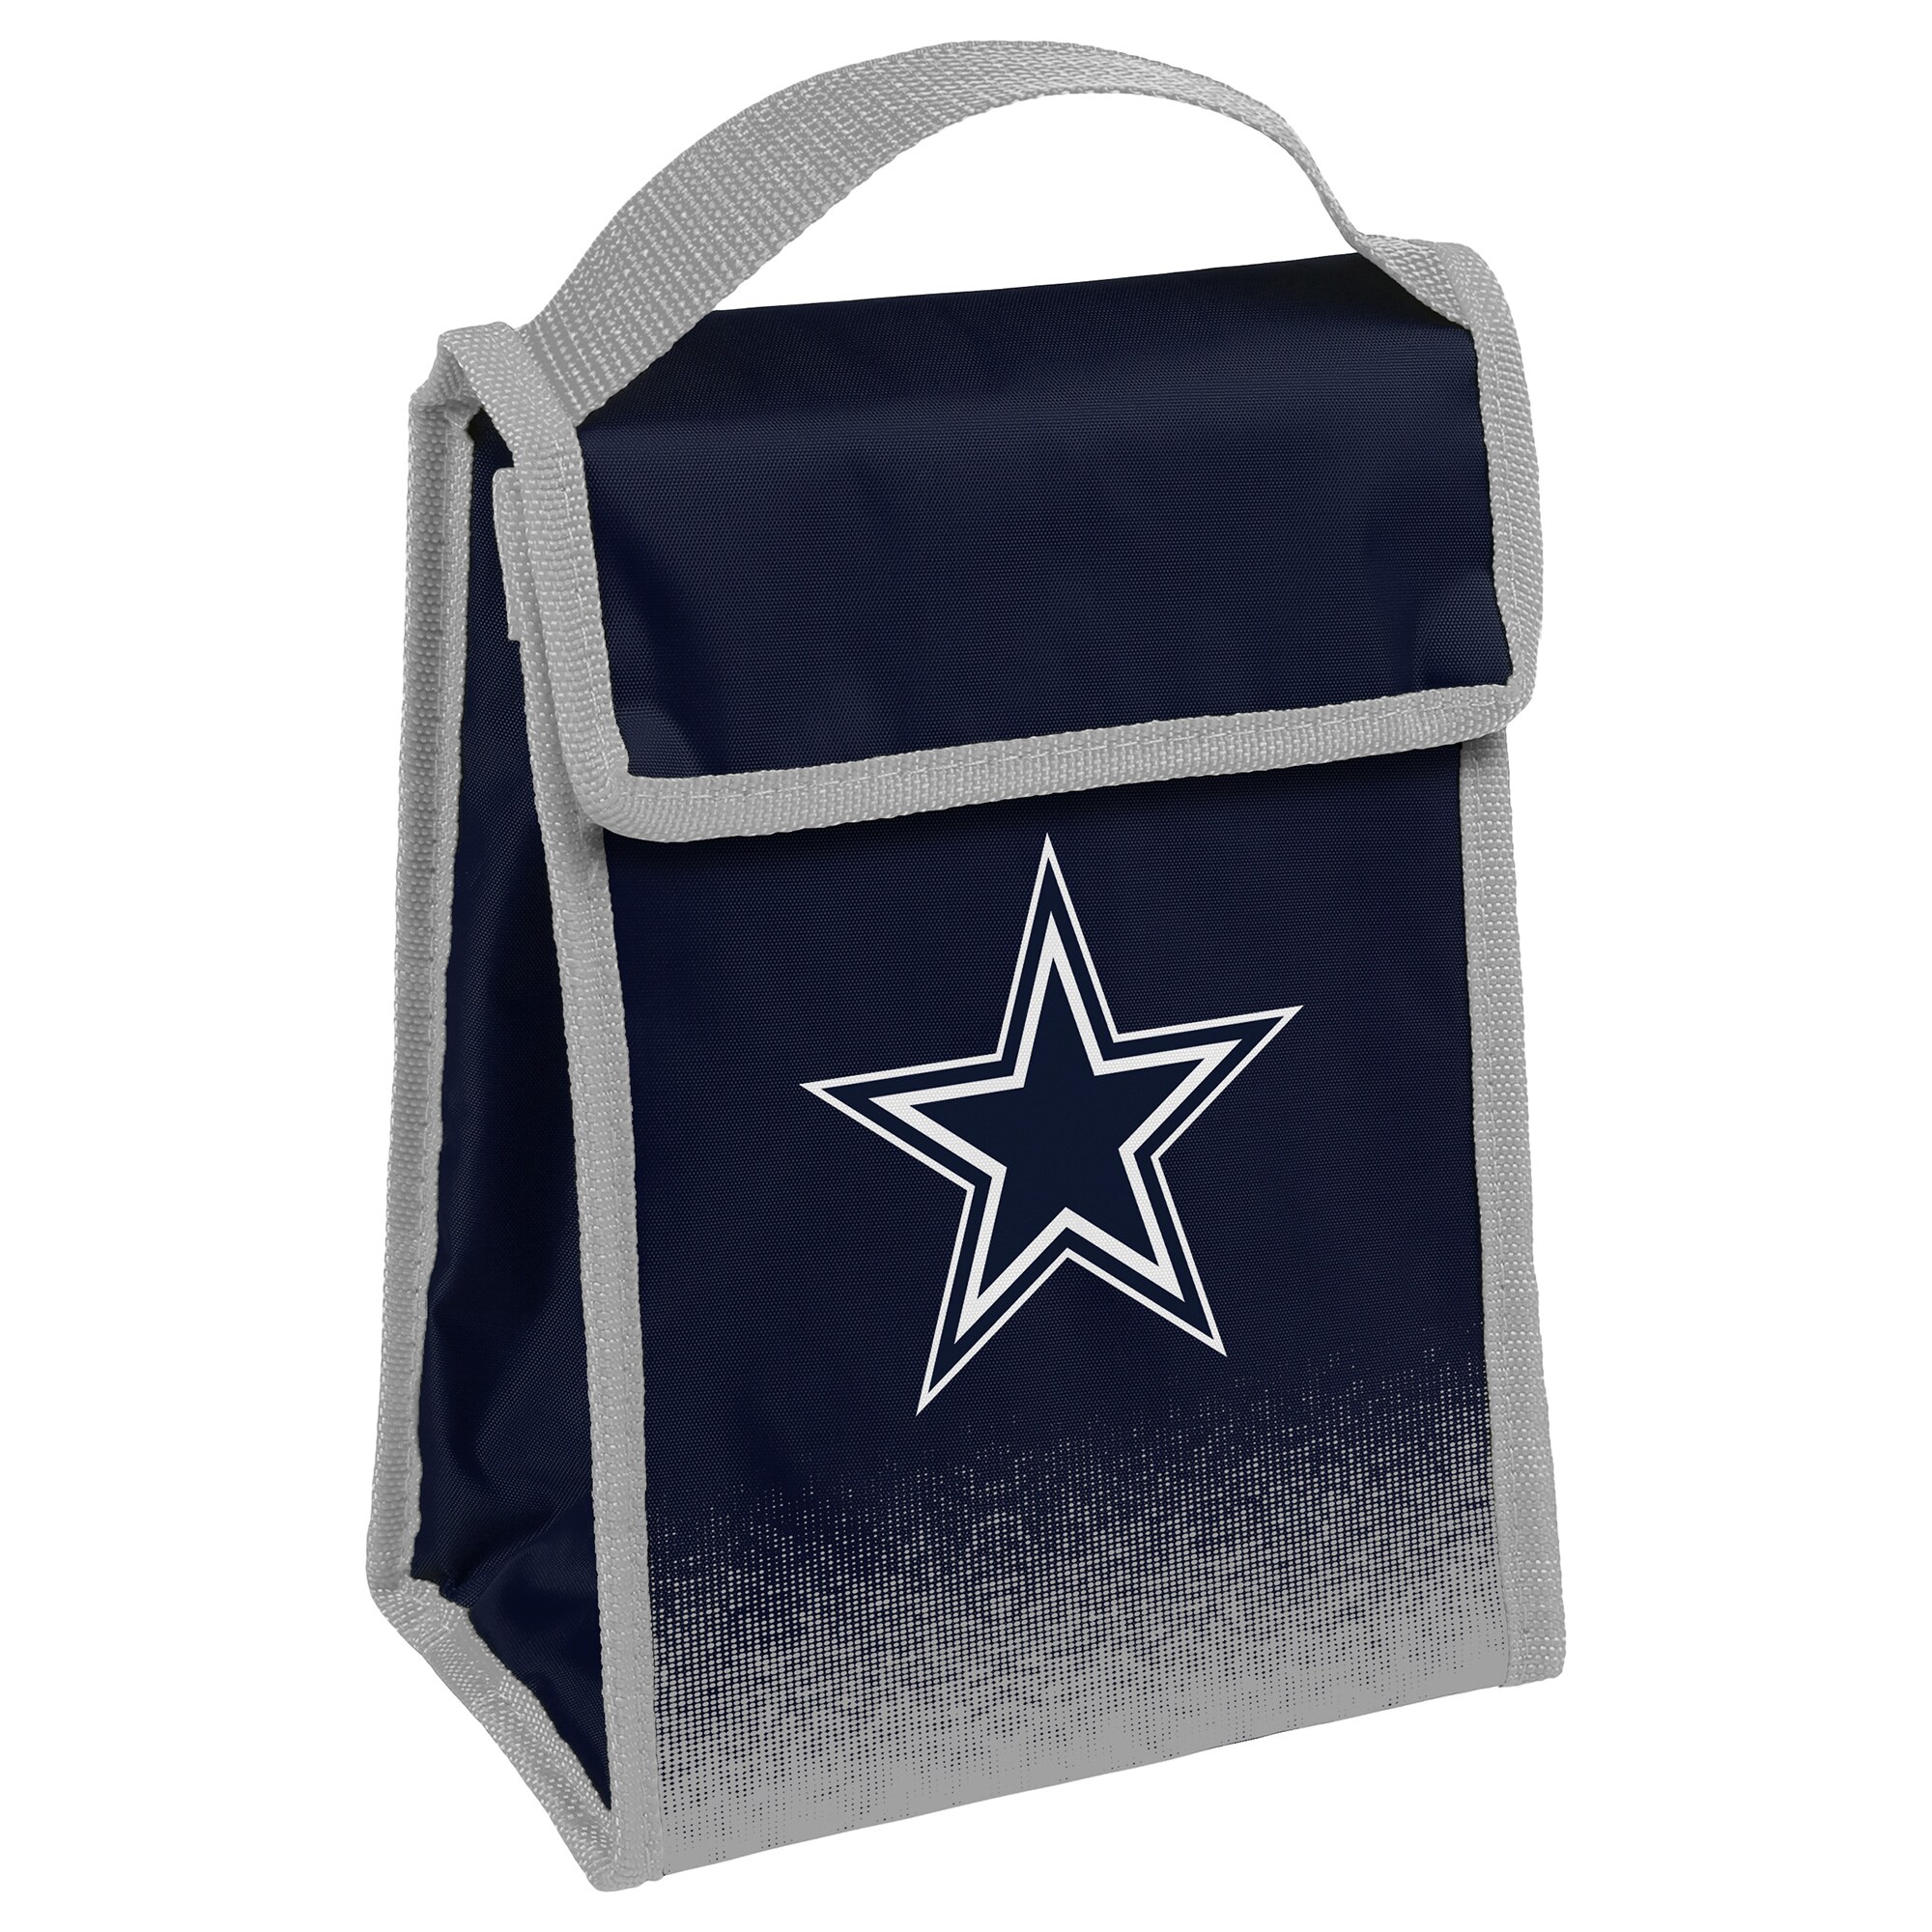 Forever Collectibles - Gradient Lunch Bag, Dallas Cowboys - Walmart.com